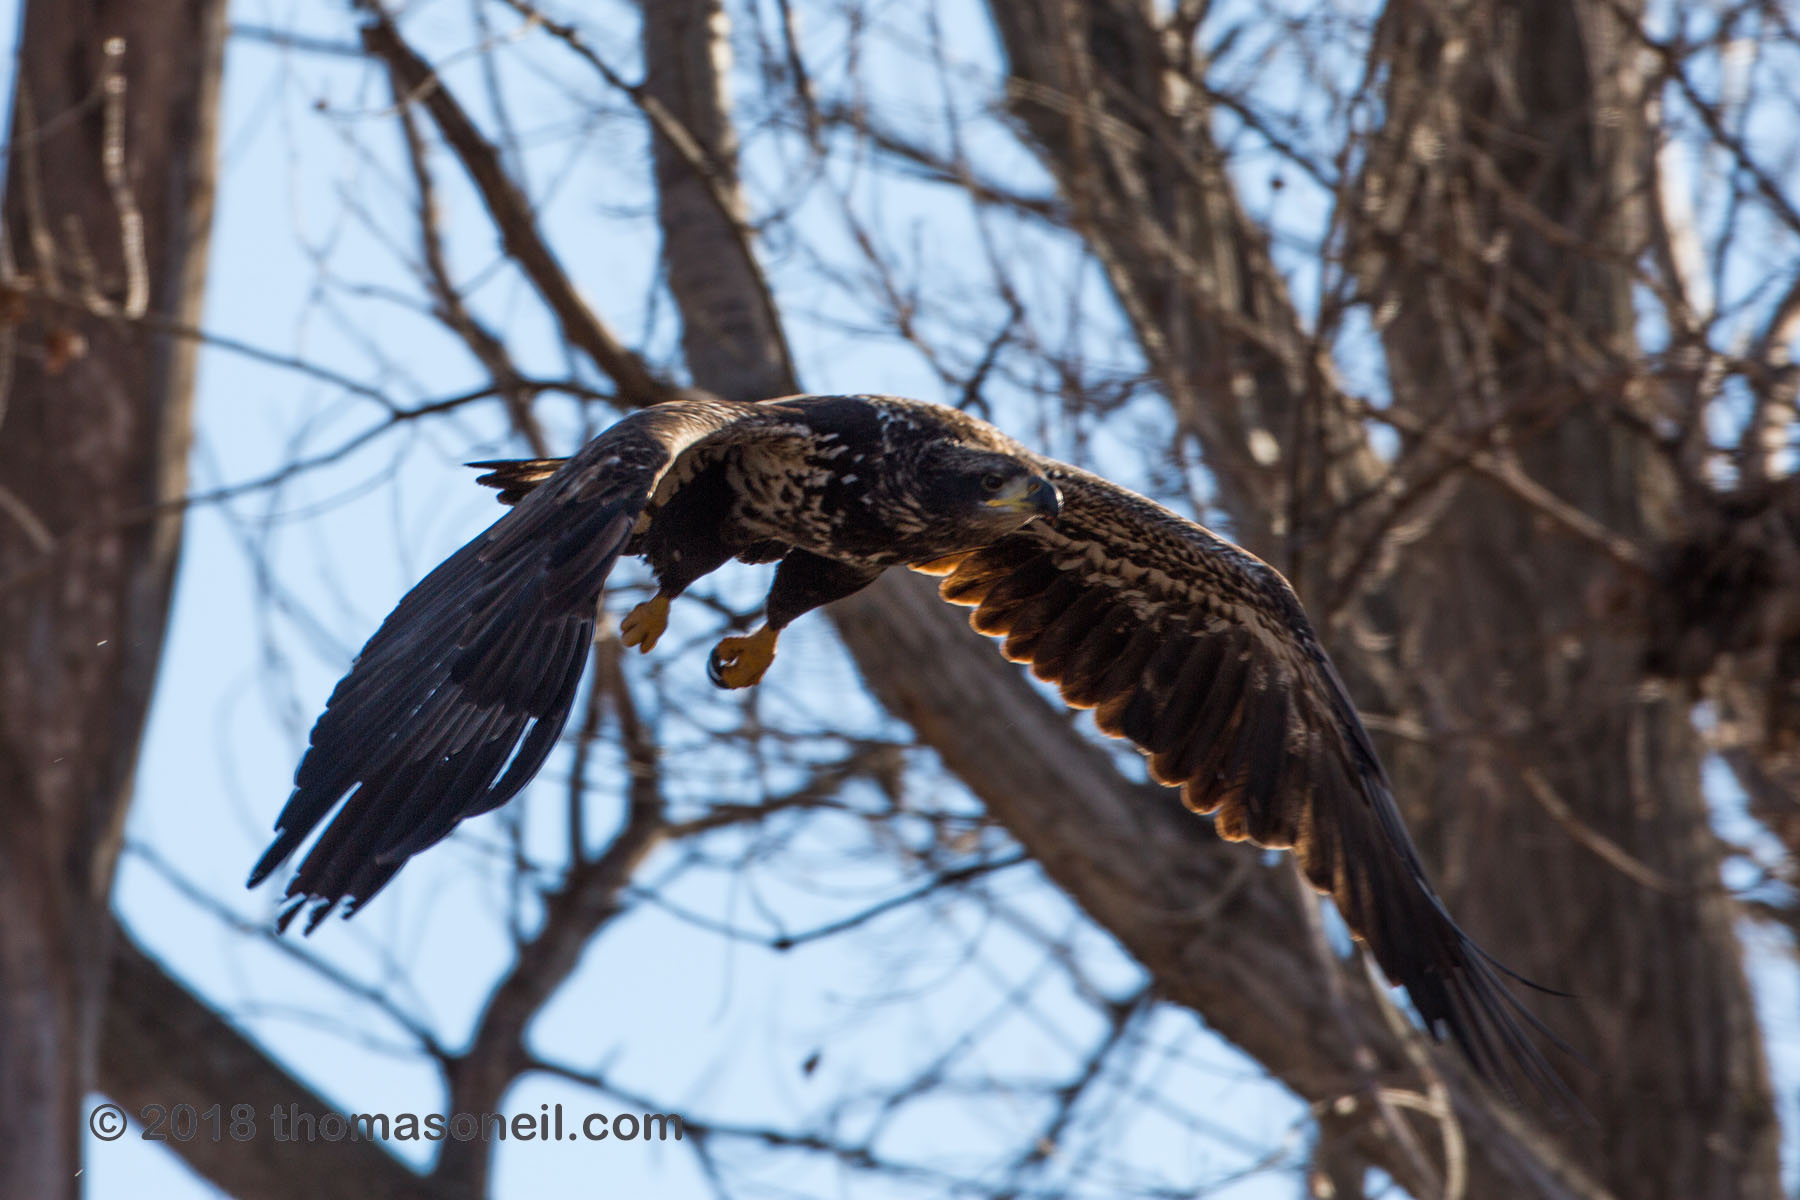 Juvenile bald eagle takes flight, Loess Bluffs National Wildlife Refuge, Missouri.  Click for next photo.